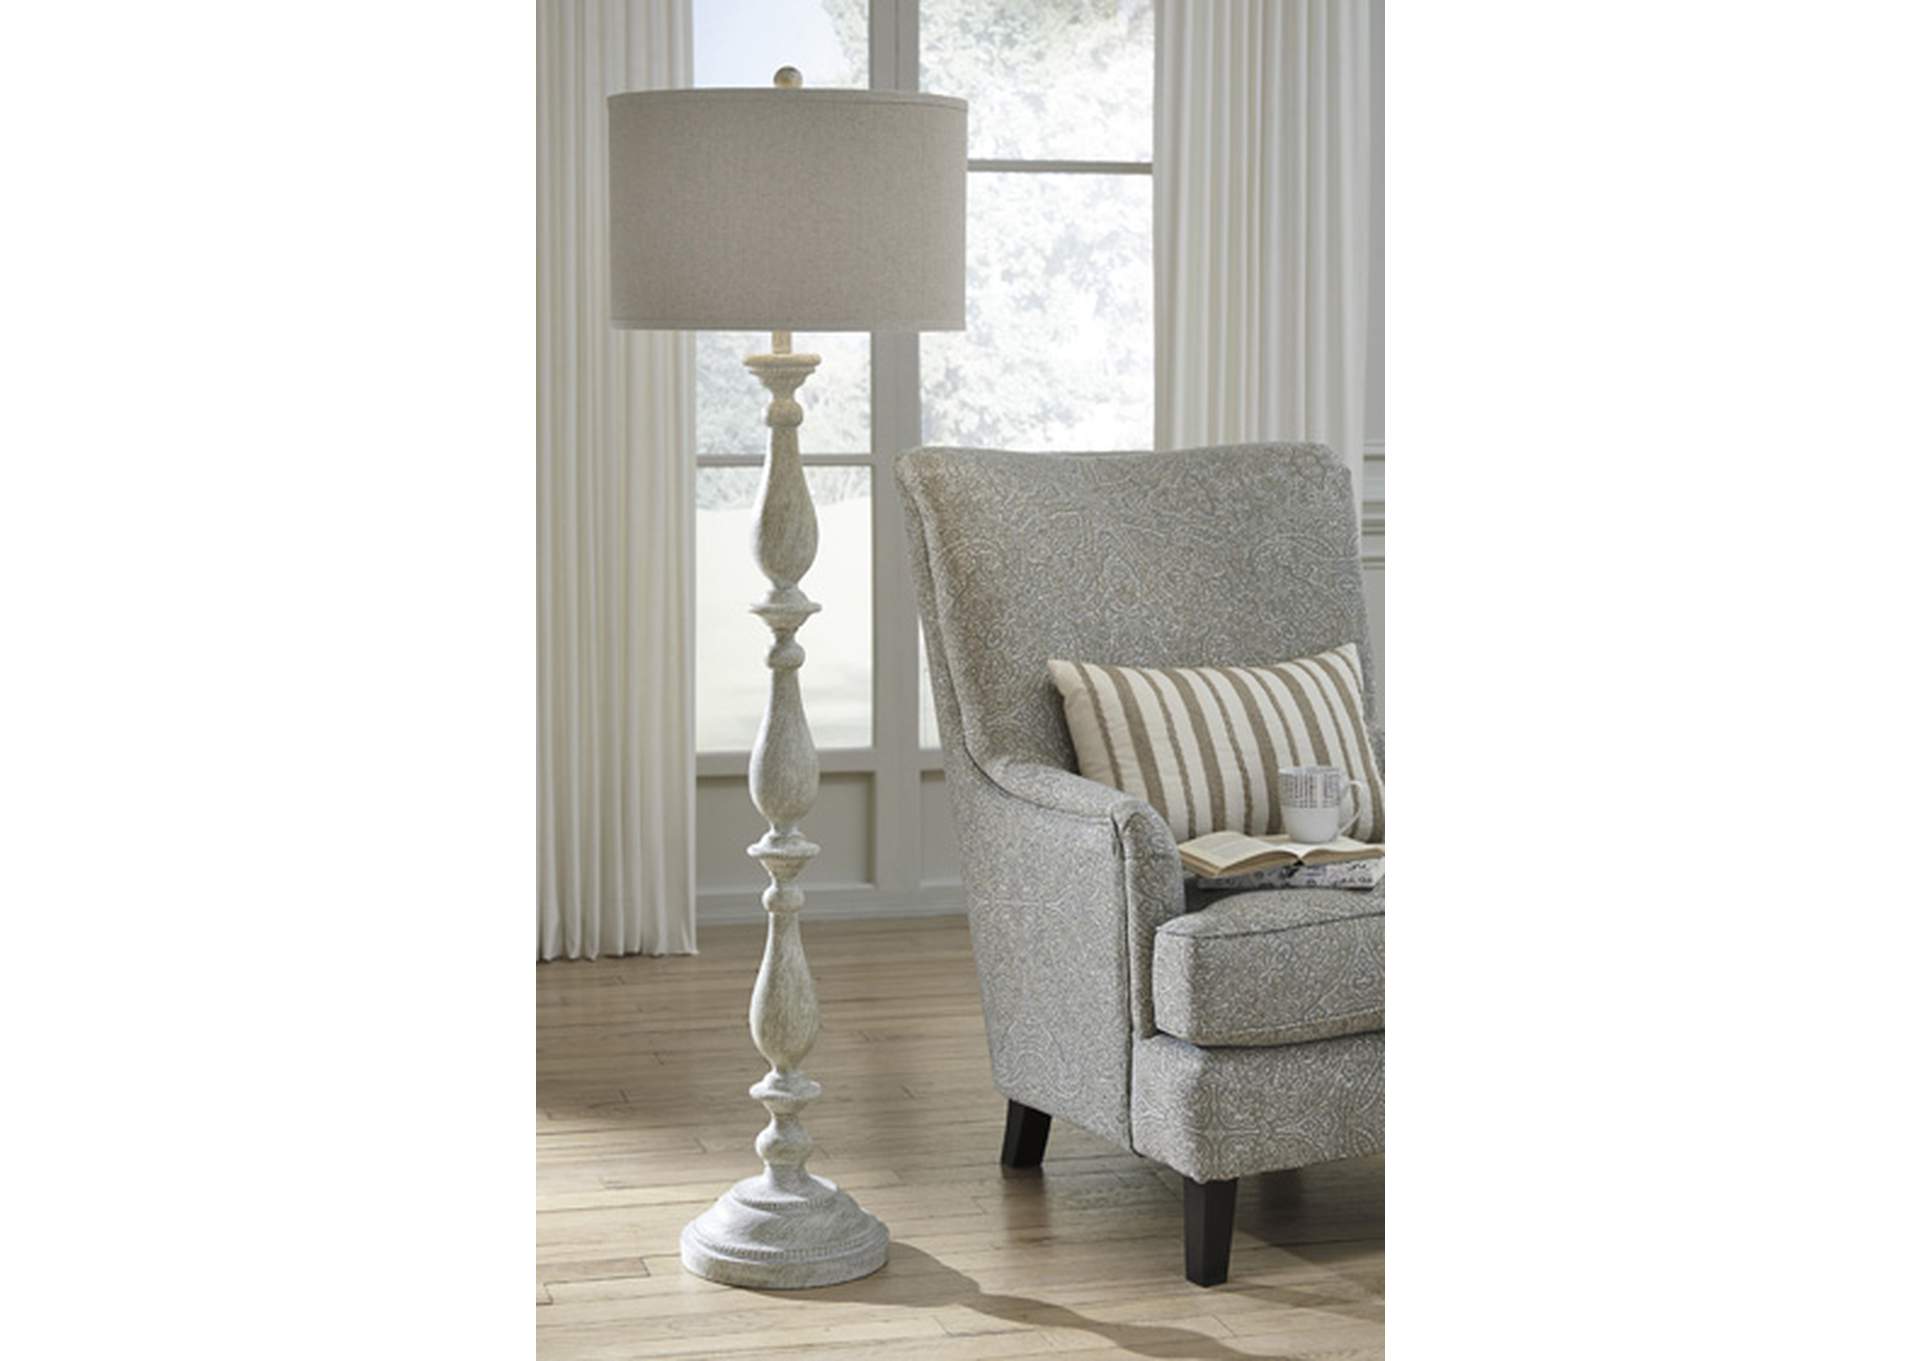 Bernadate Floor Lamp,Signature Design By Ashley